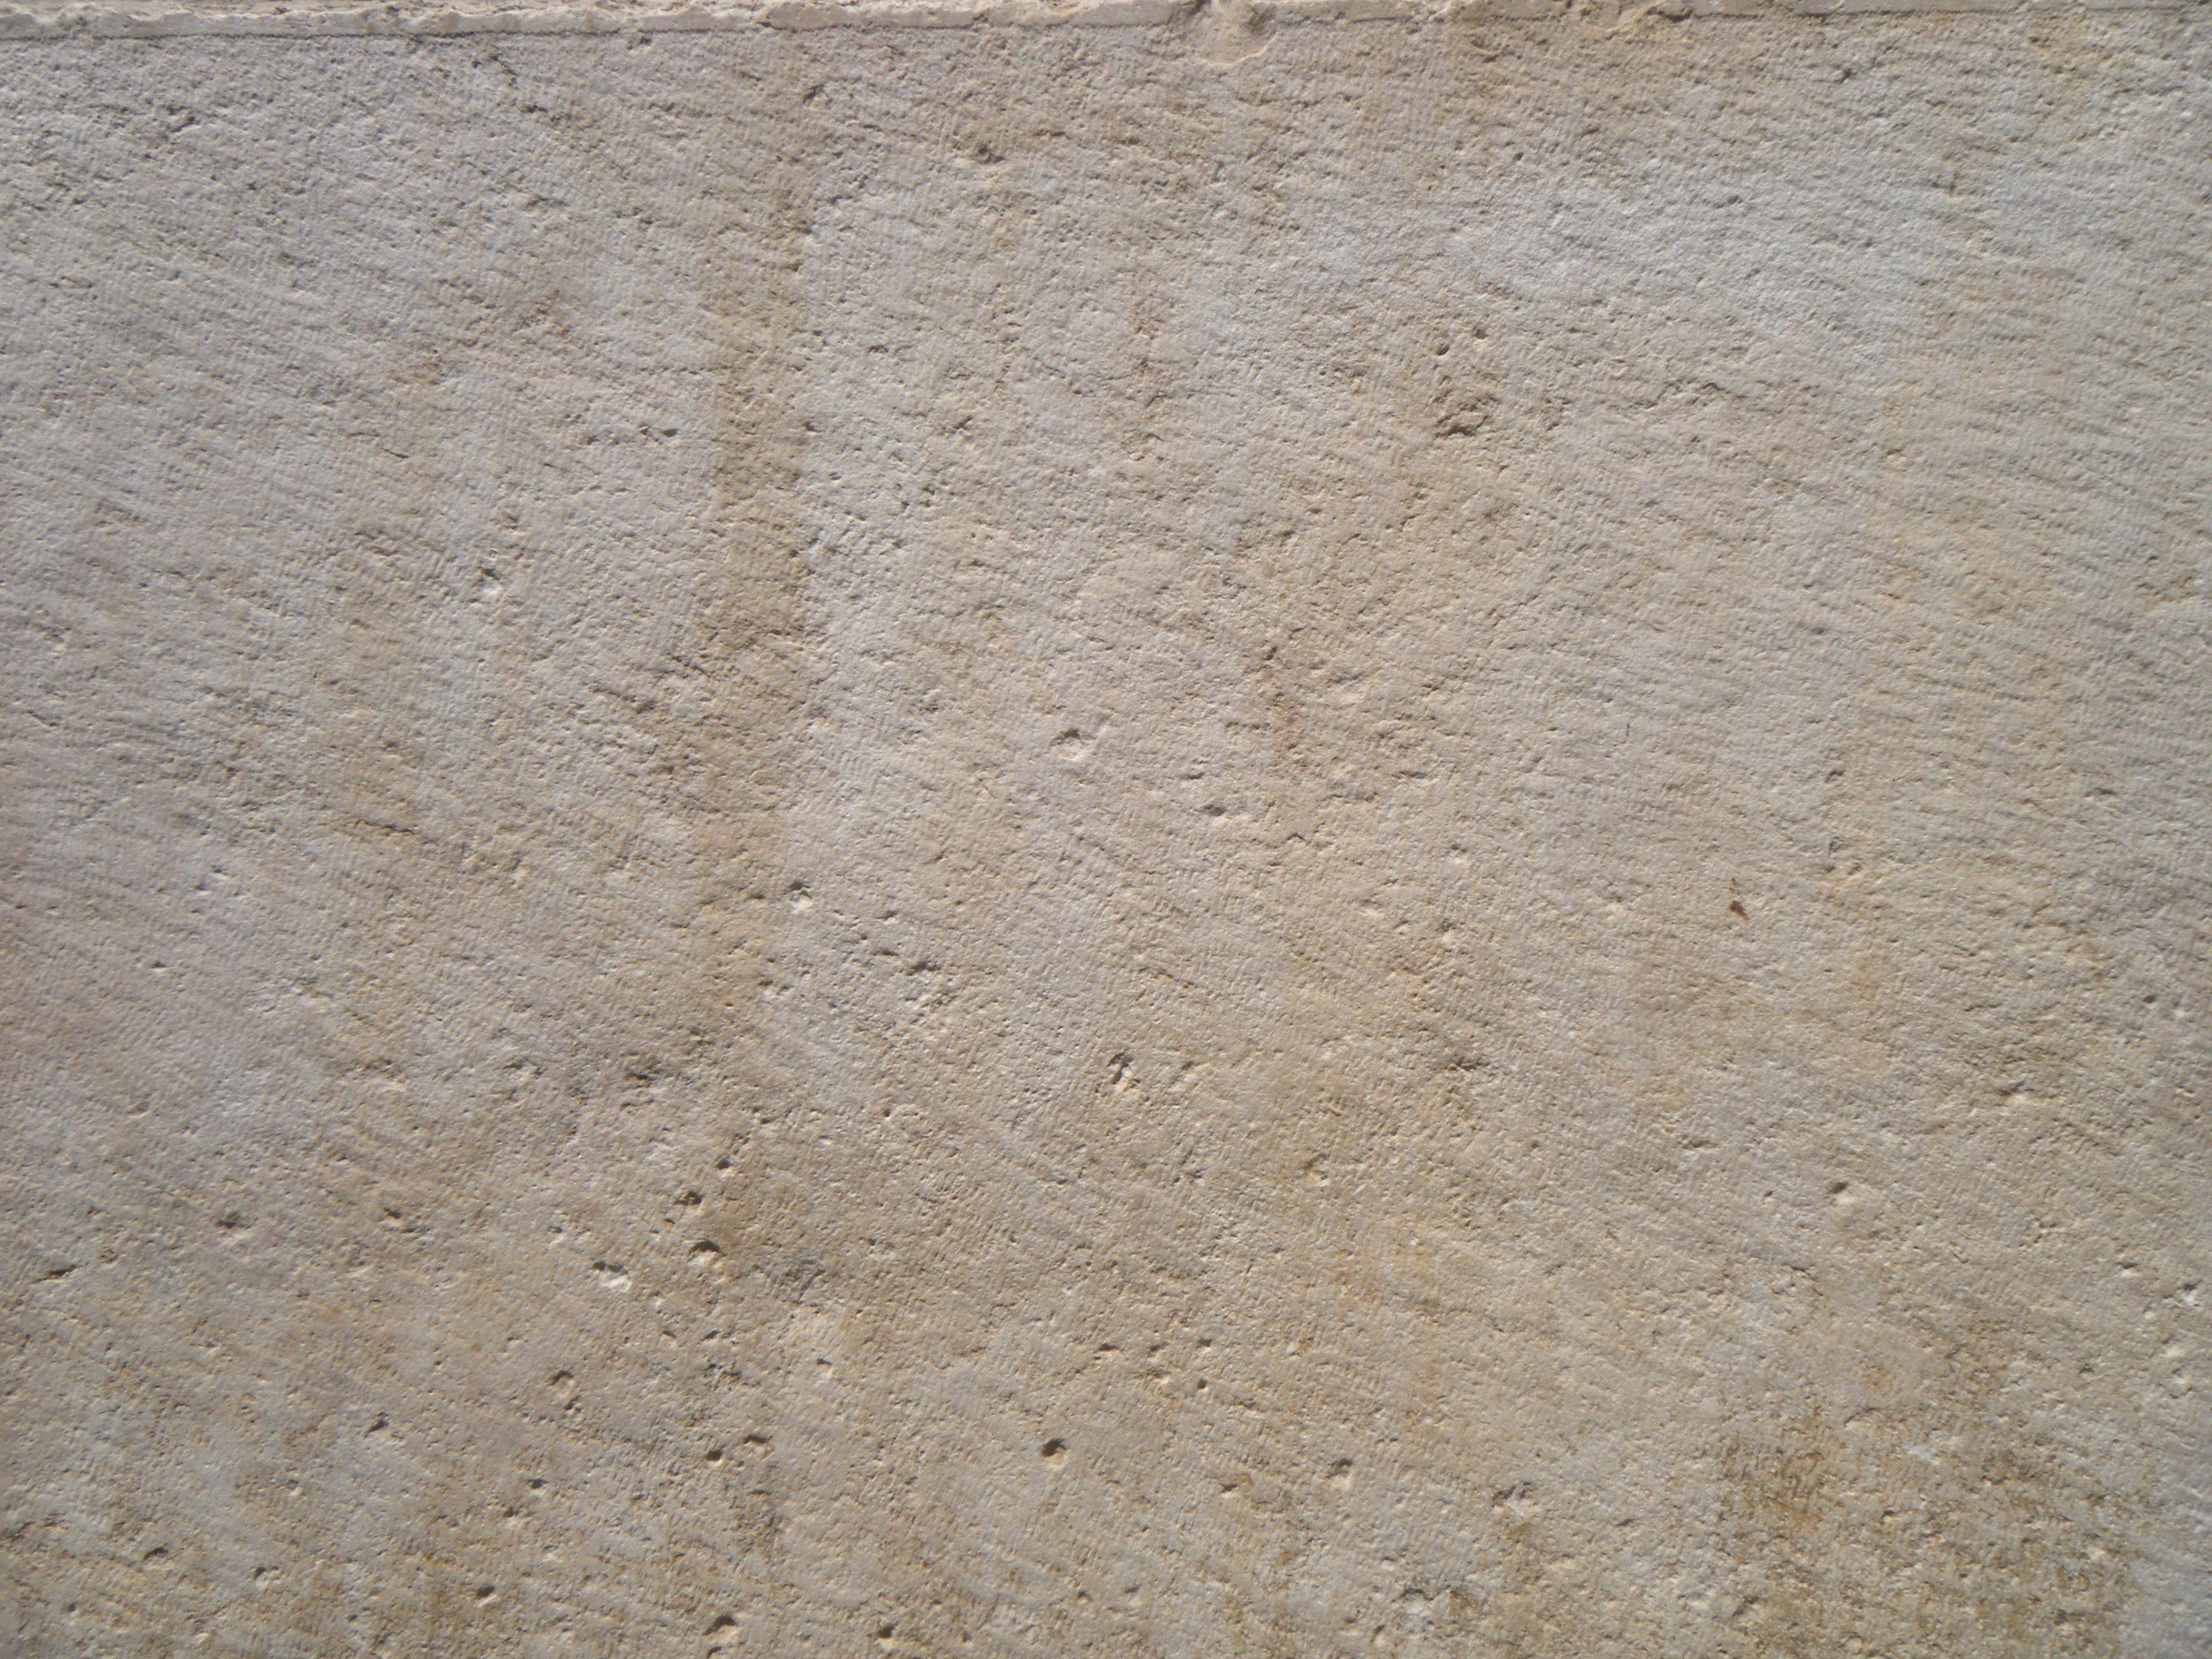 Stone surface texture photo